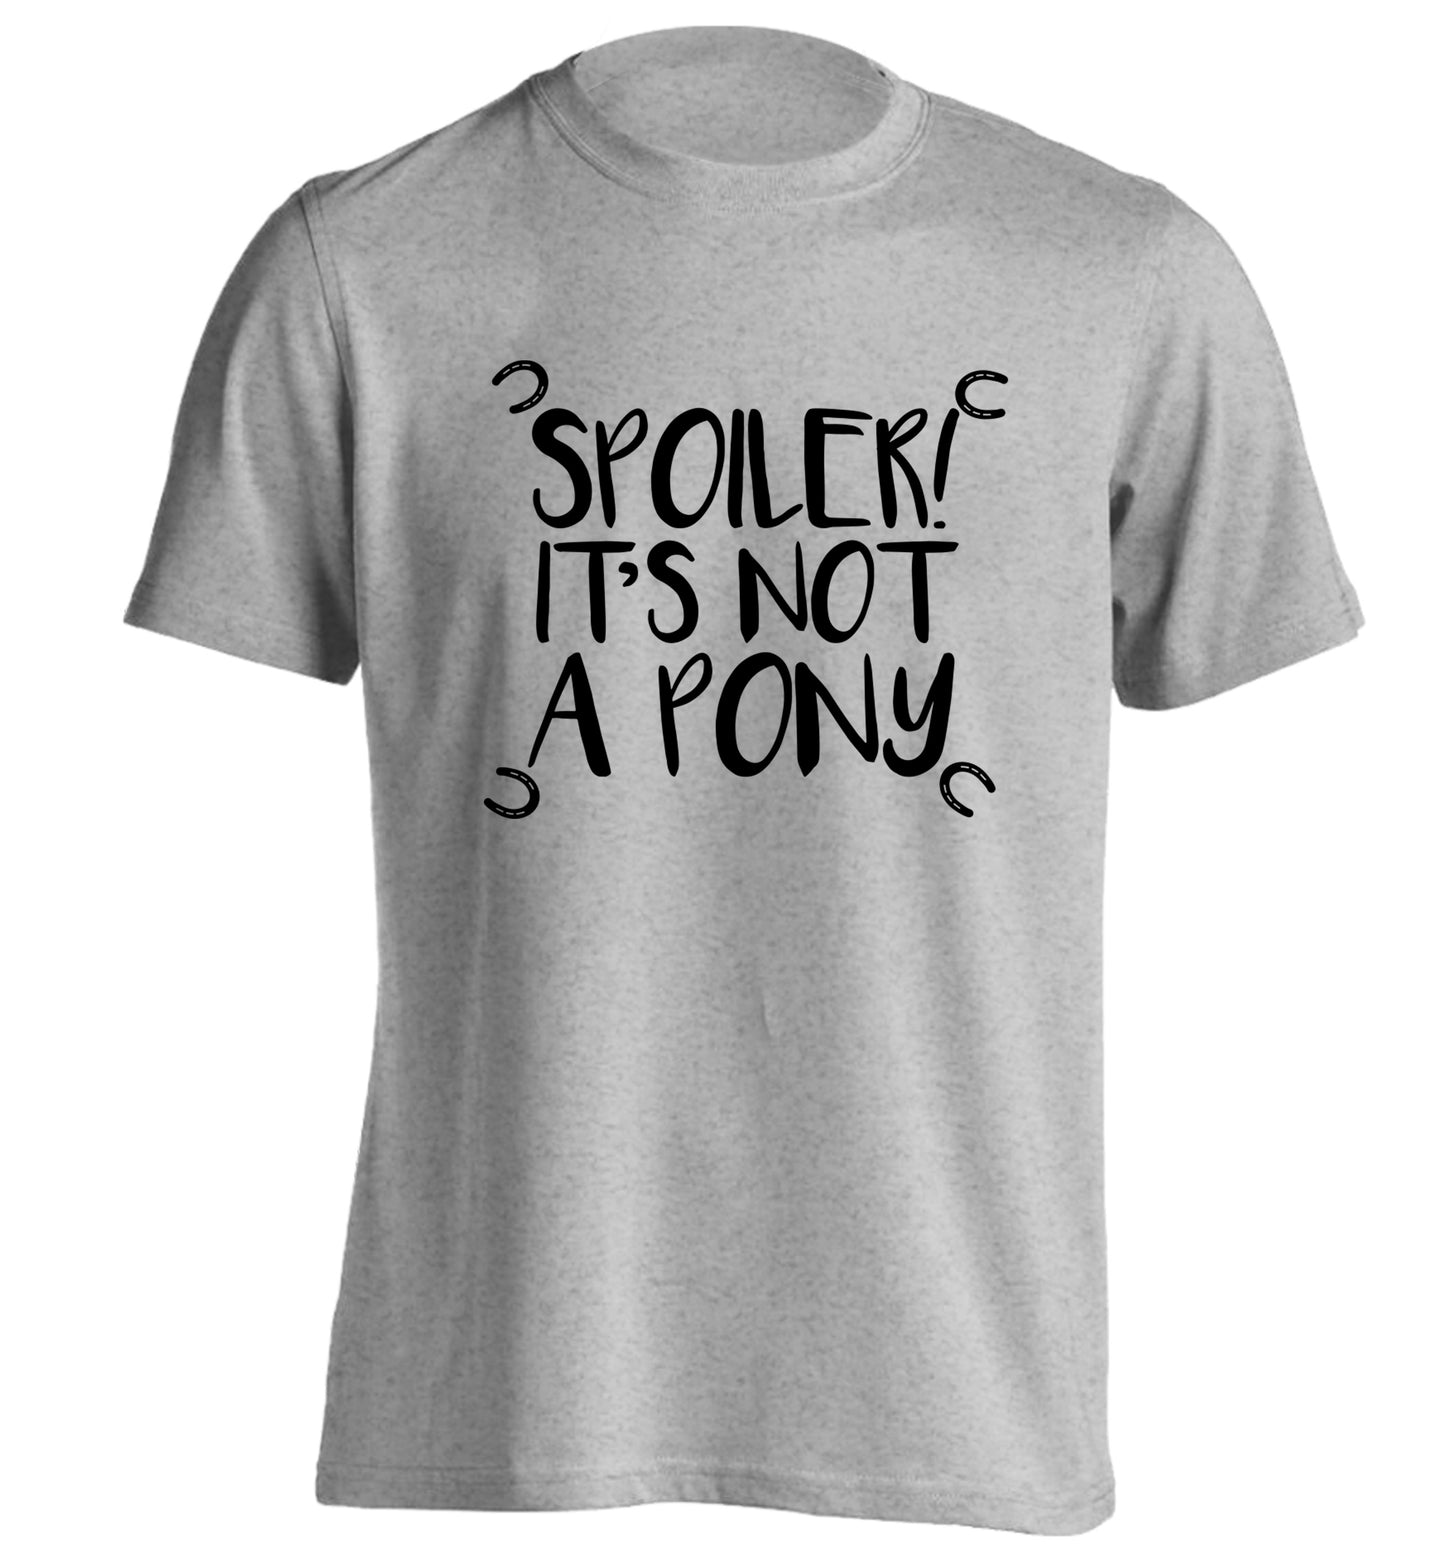 Spoiler it's not a pony adults unisex grey Tshirt 2XL